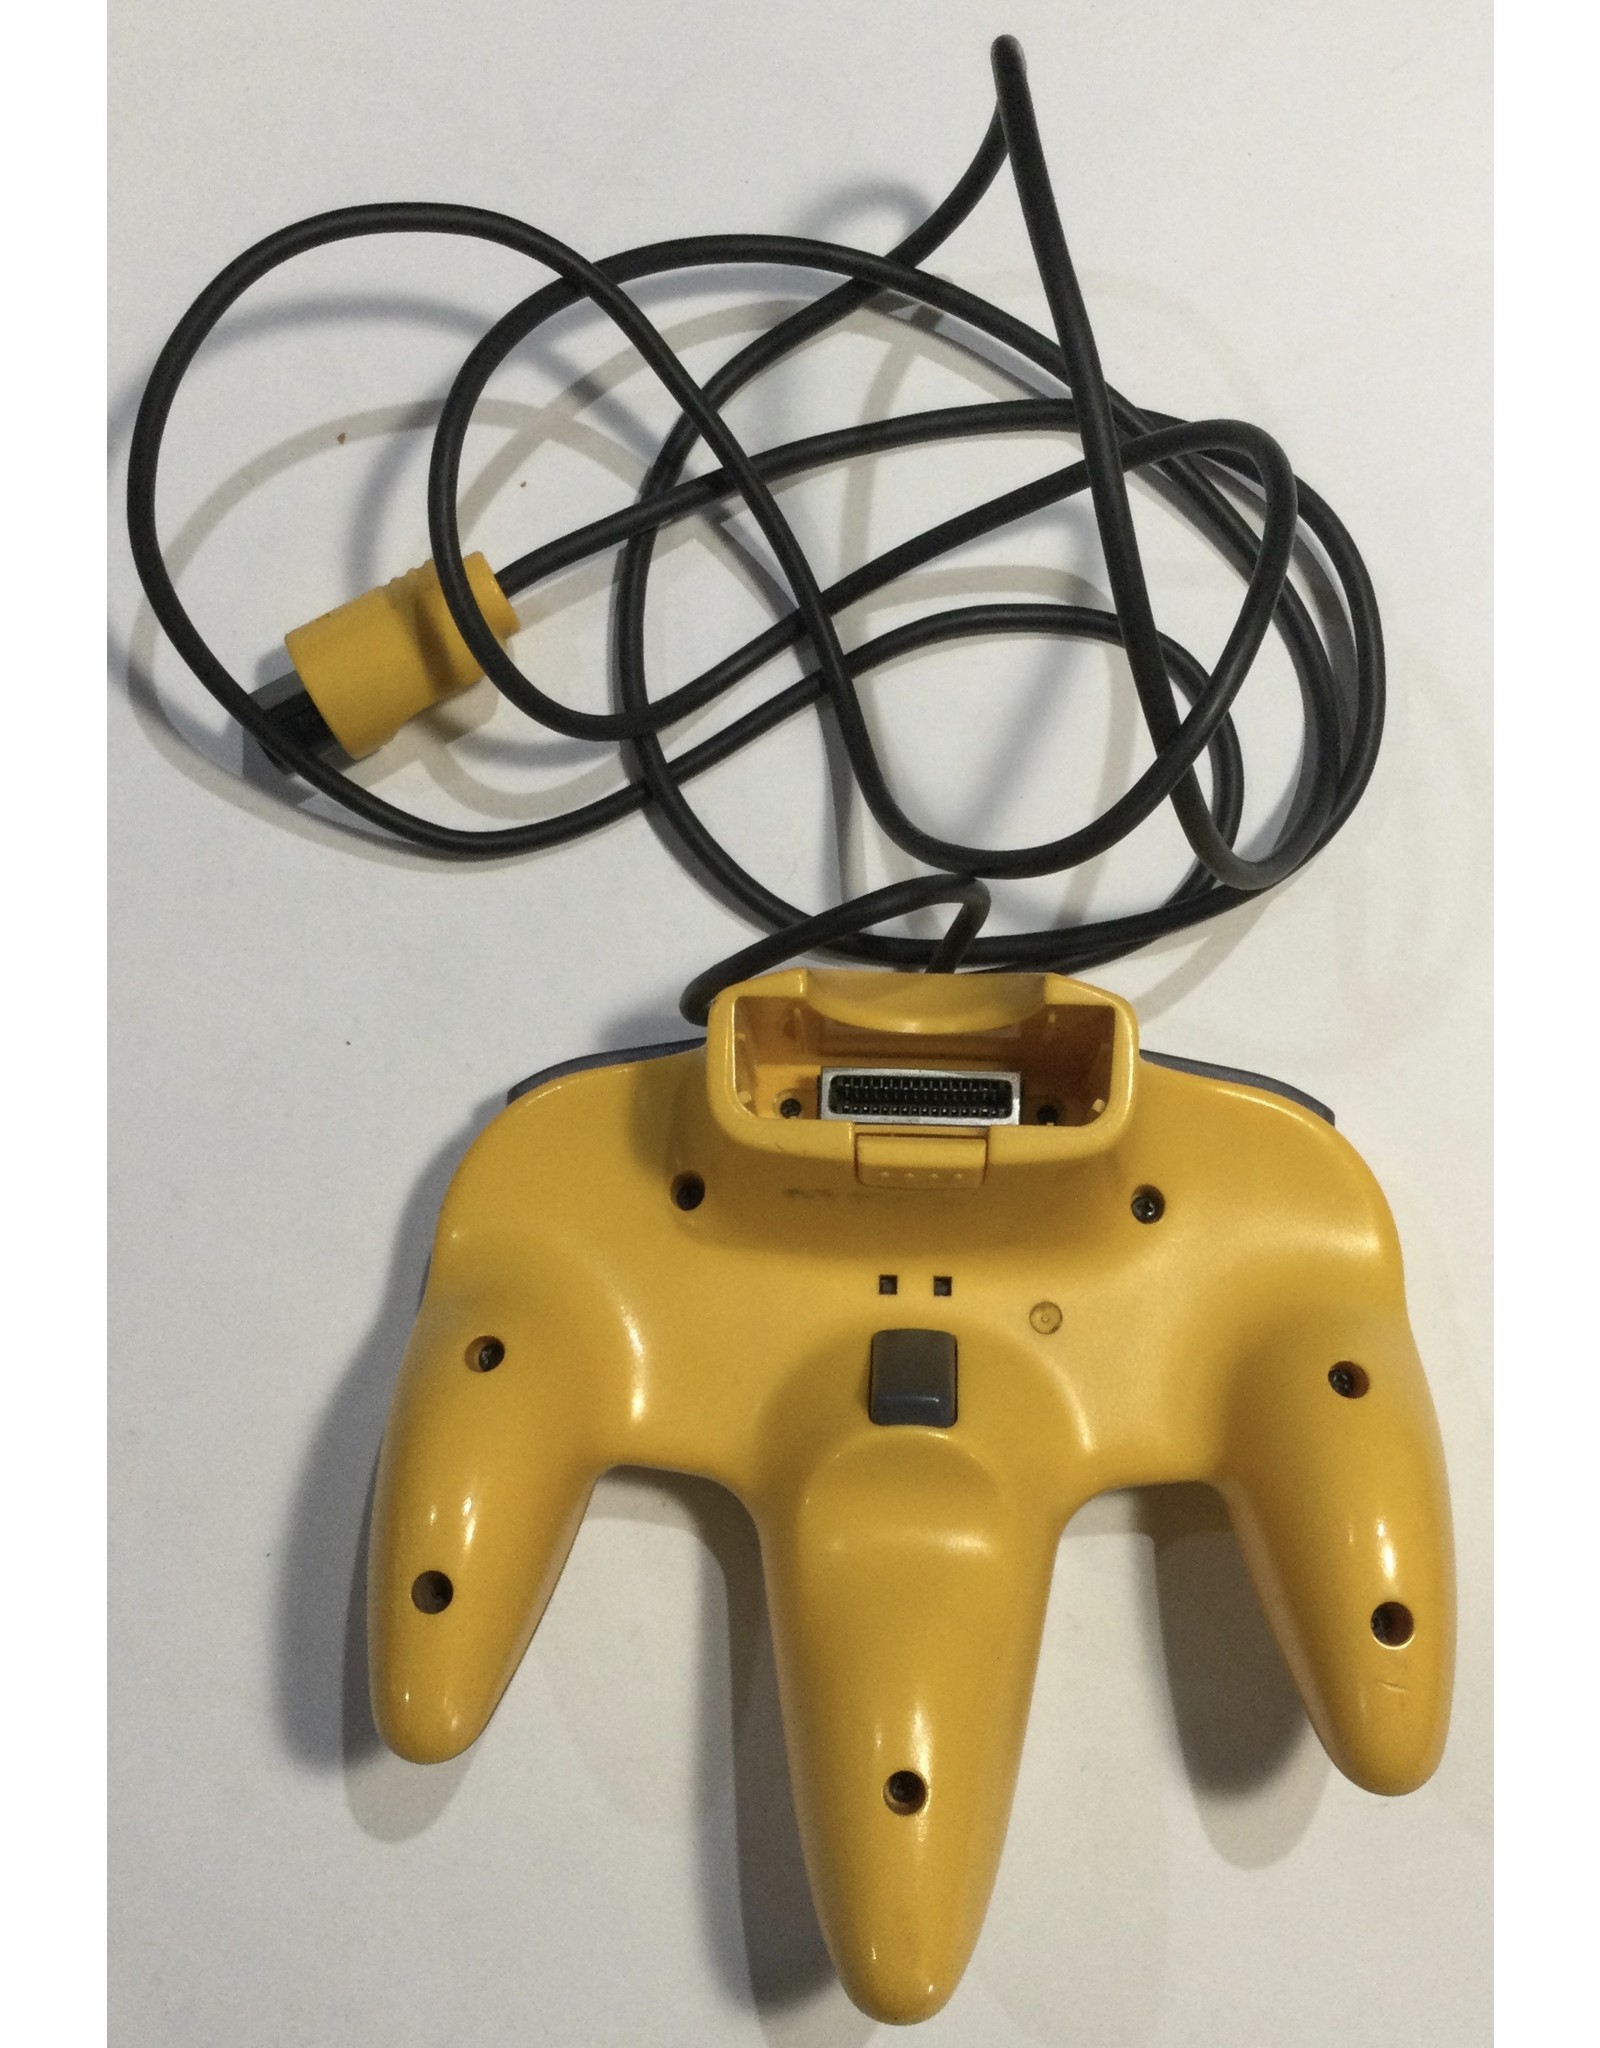 Nintendo N64 Controller - Yellow